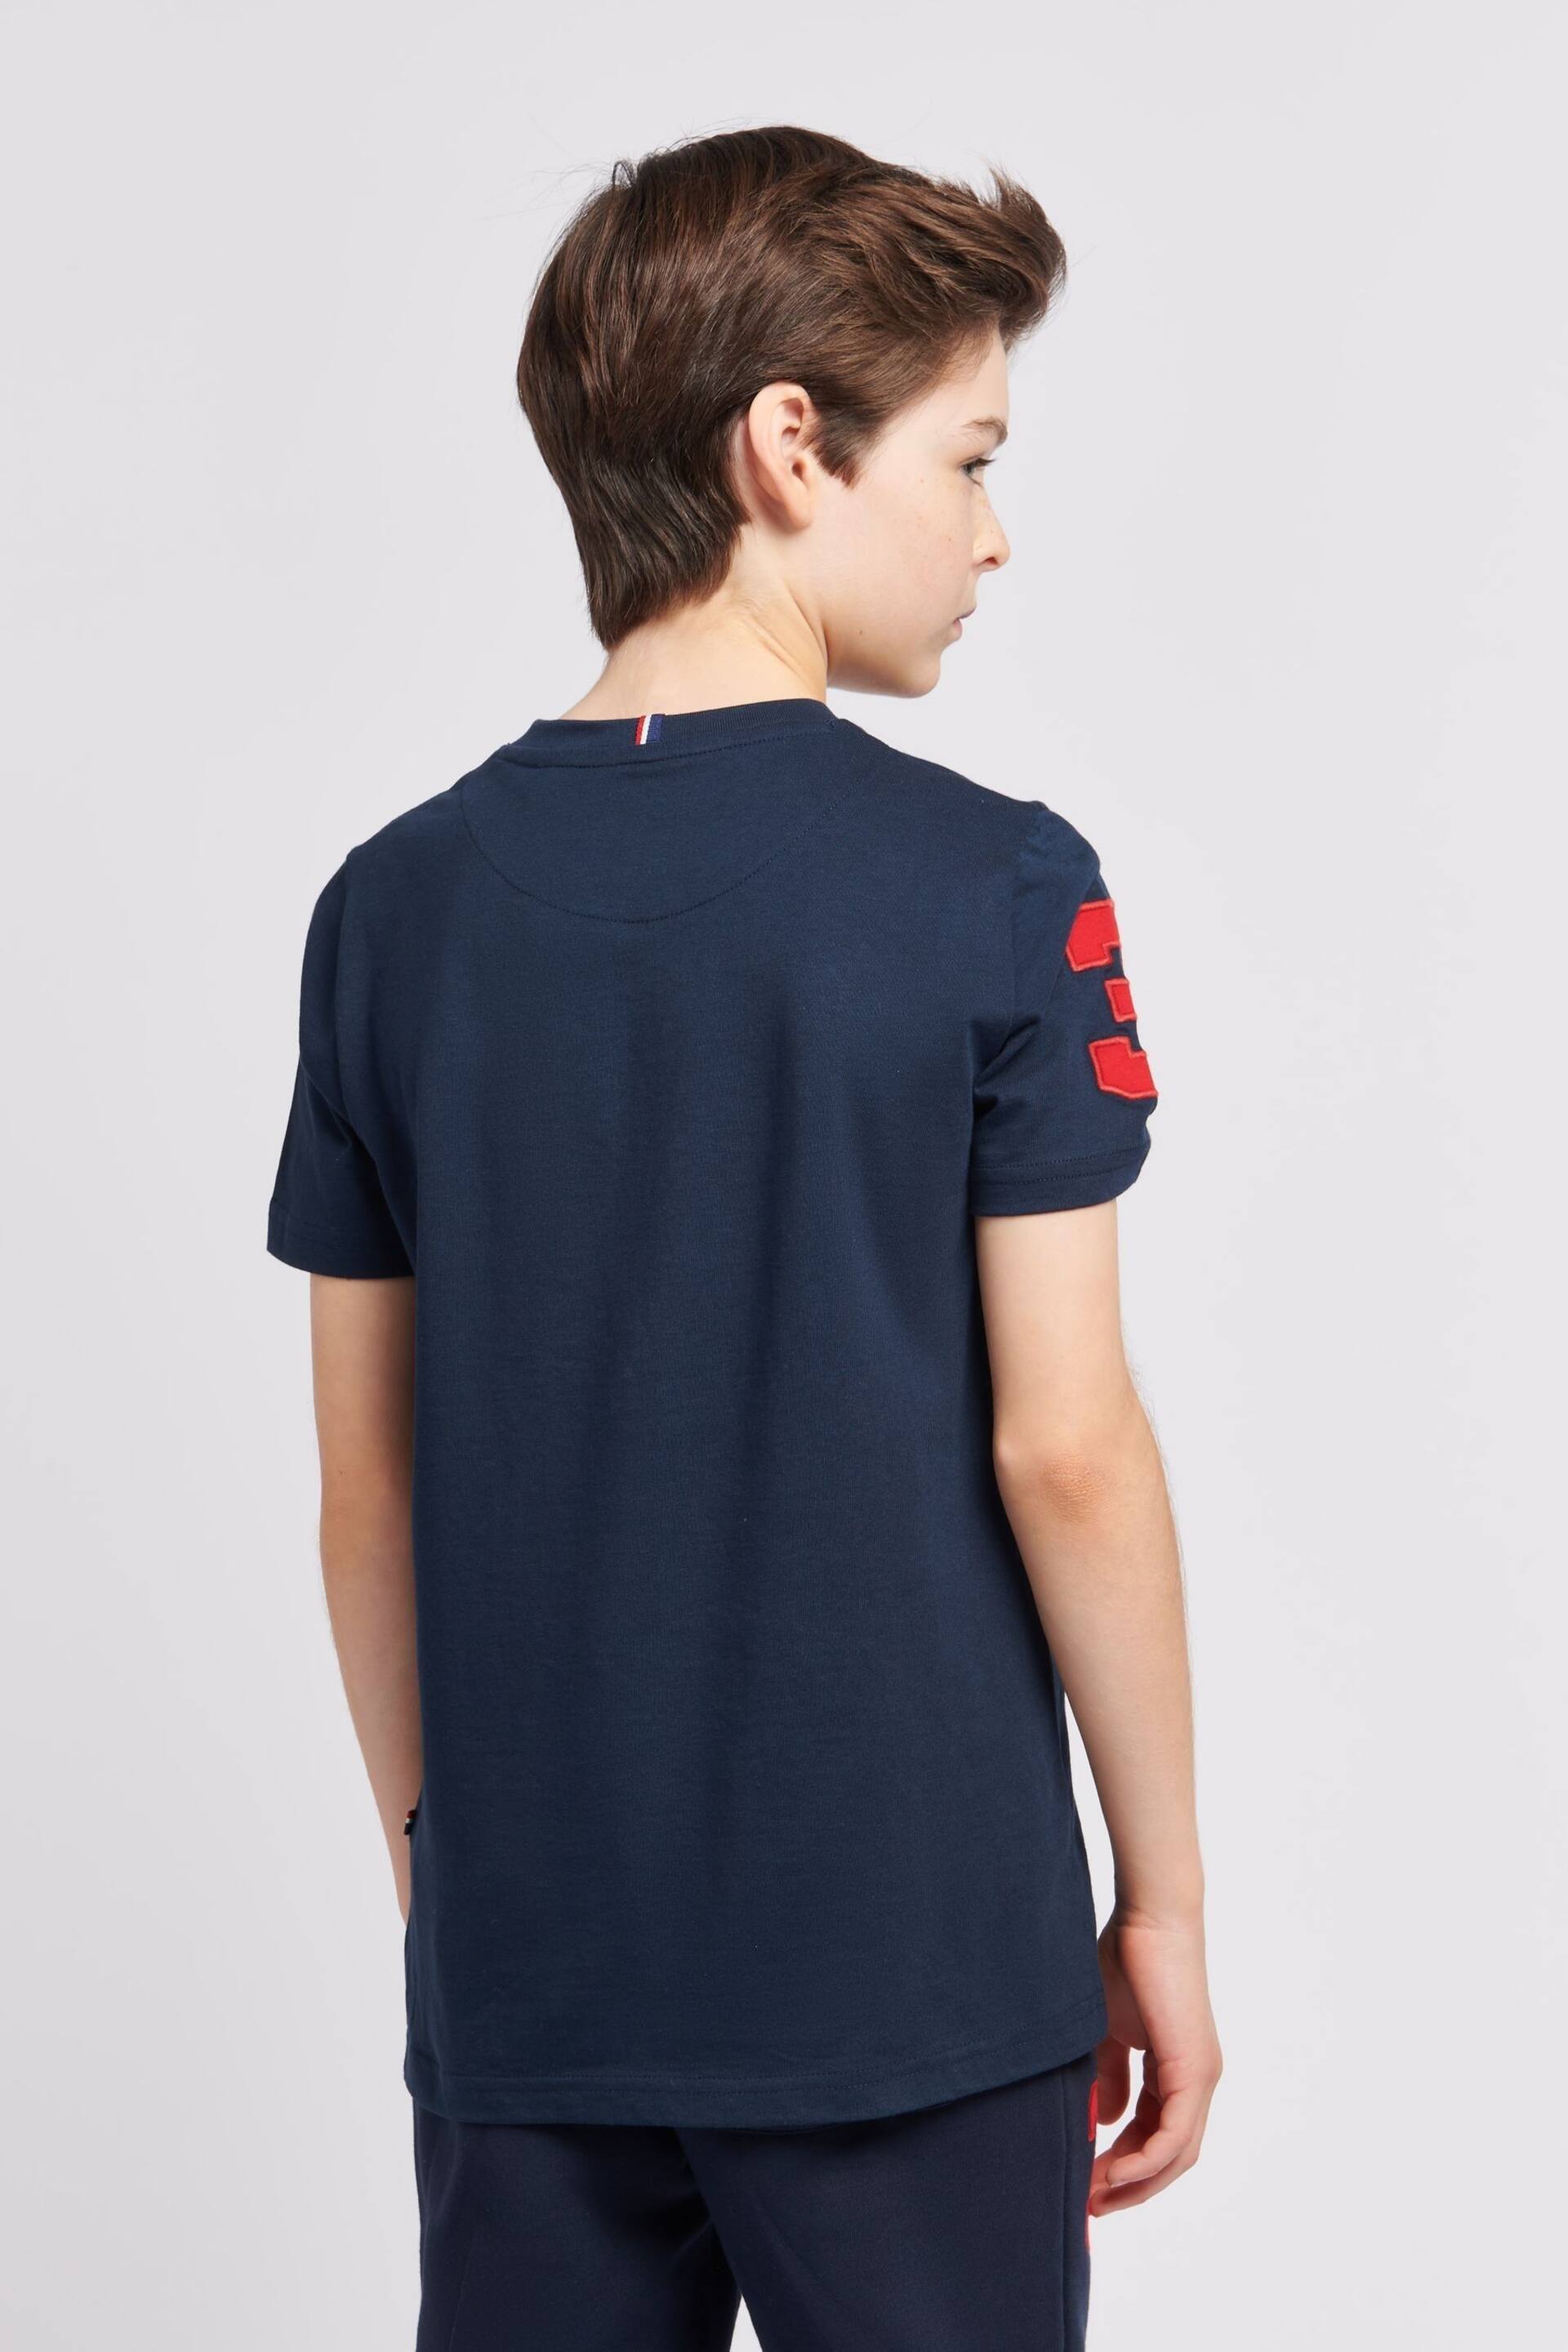 U.S. Polo Assn. Boys Player 3 T-Shirt - Image 4 of 8